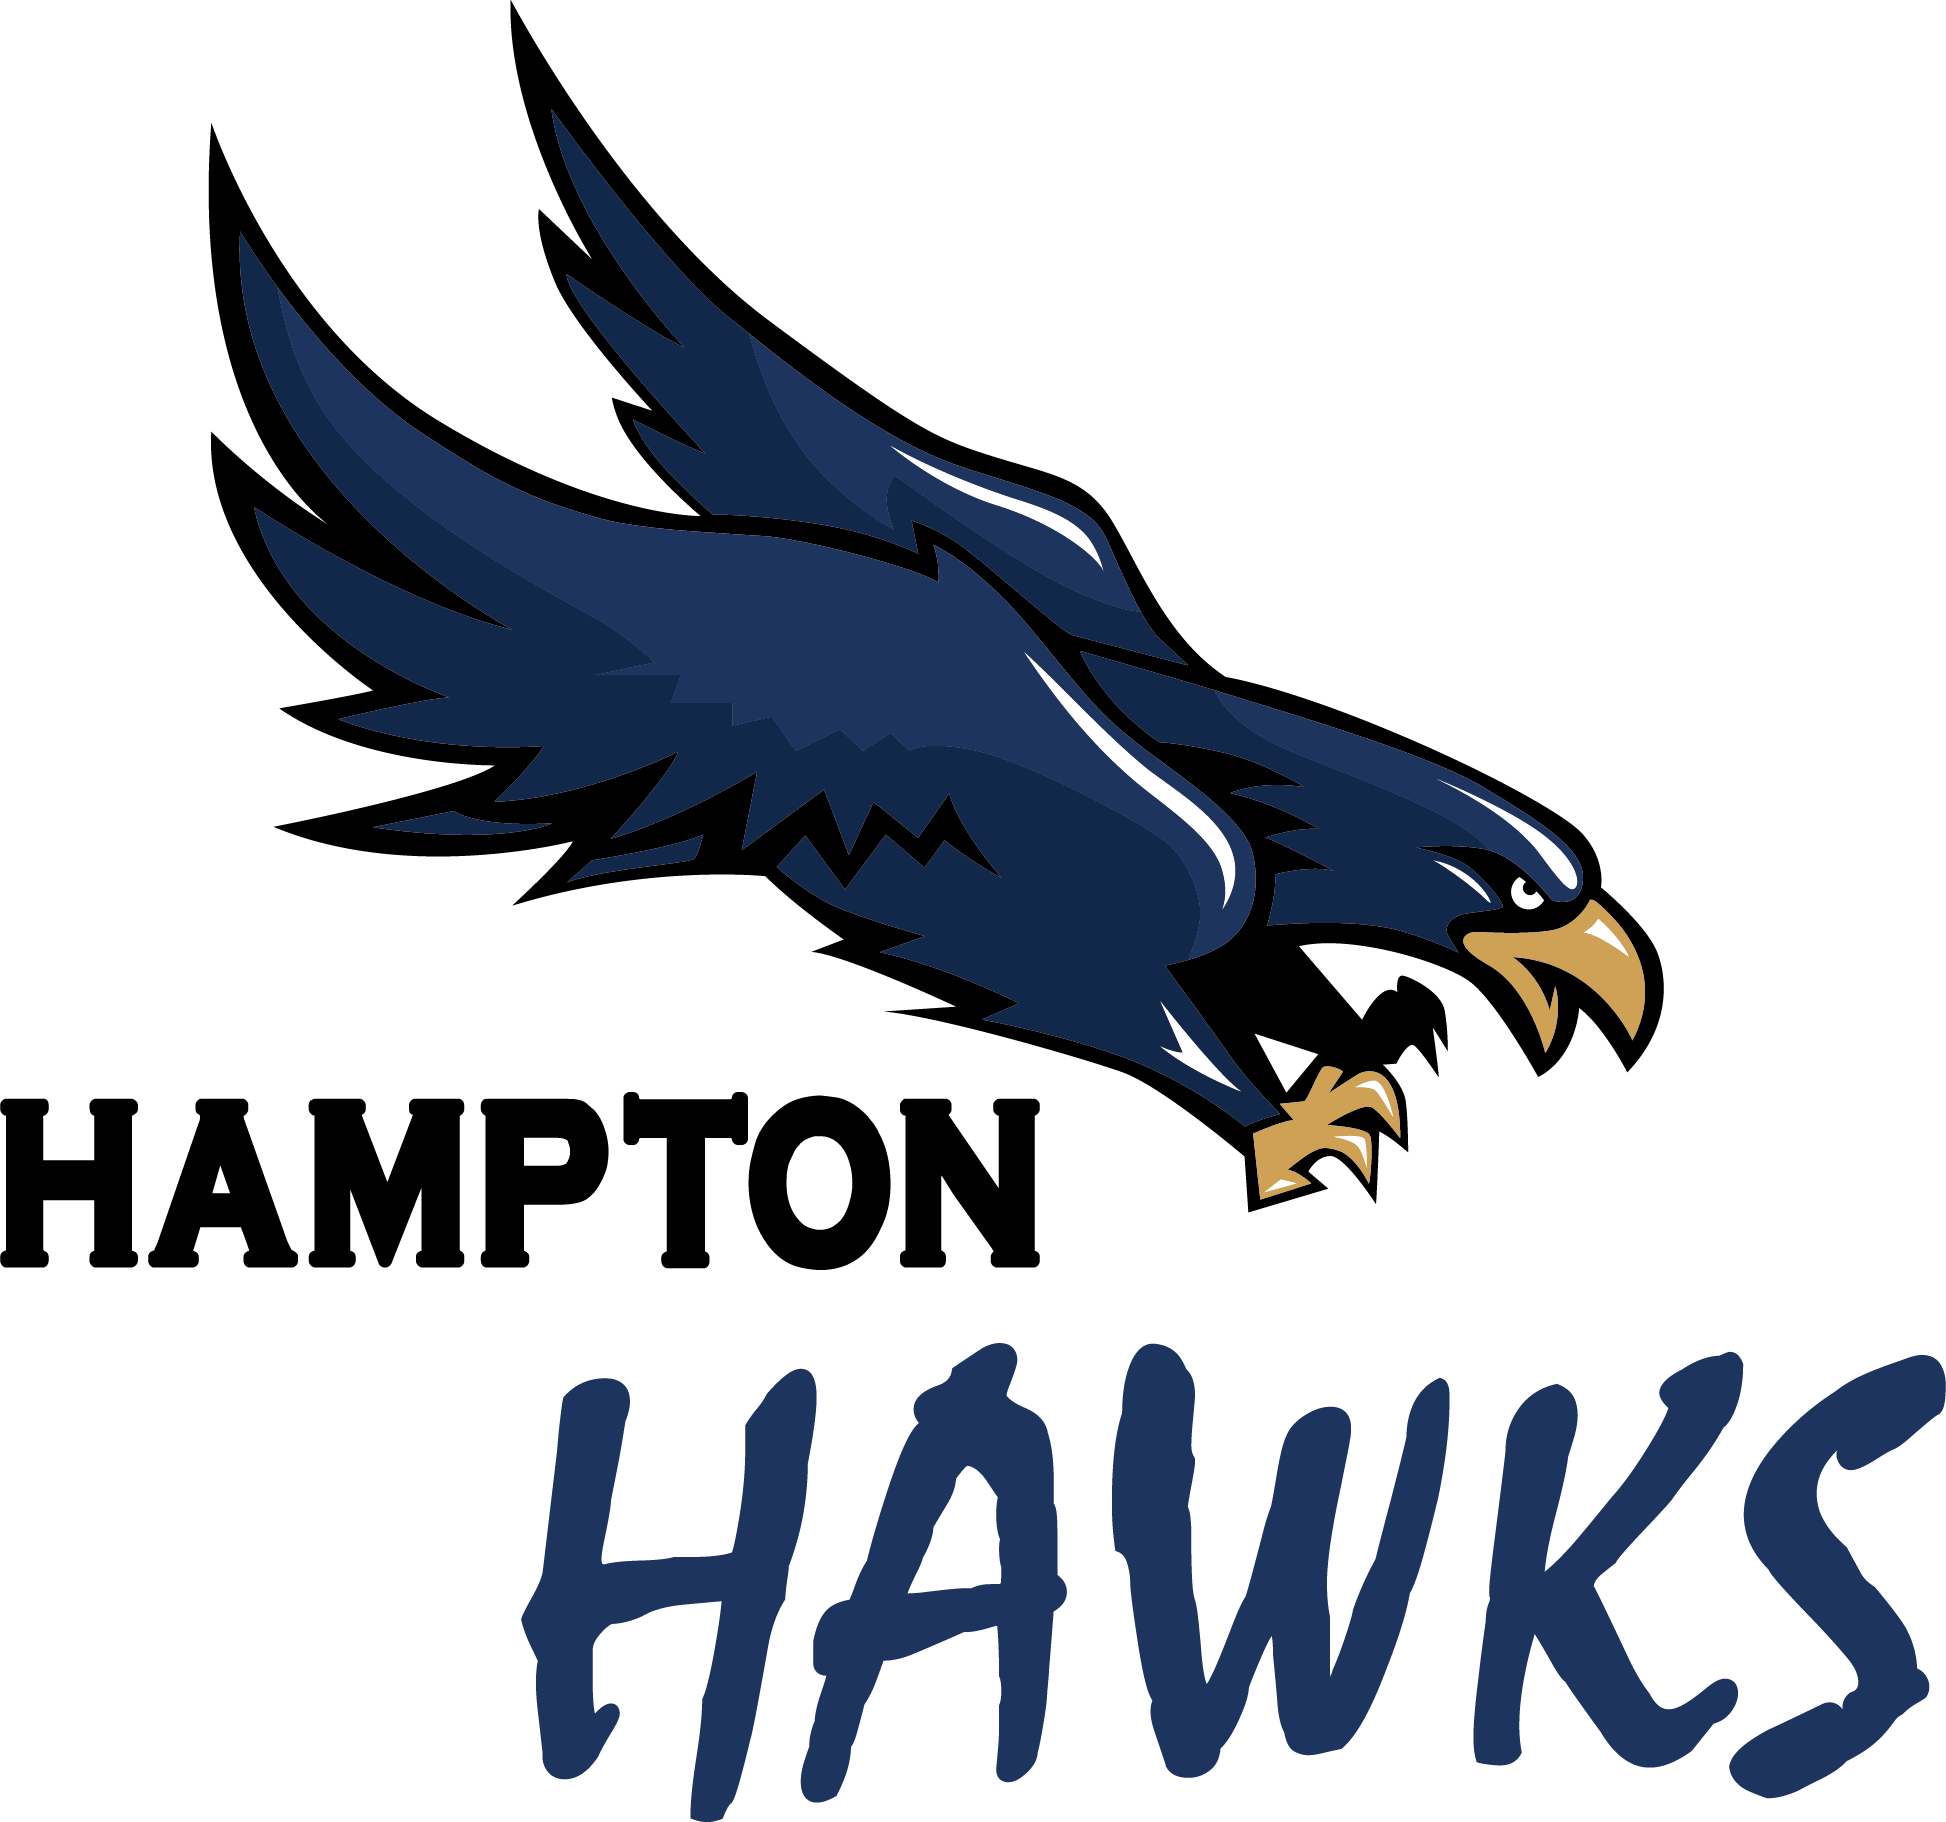 Hampton Hawks